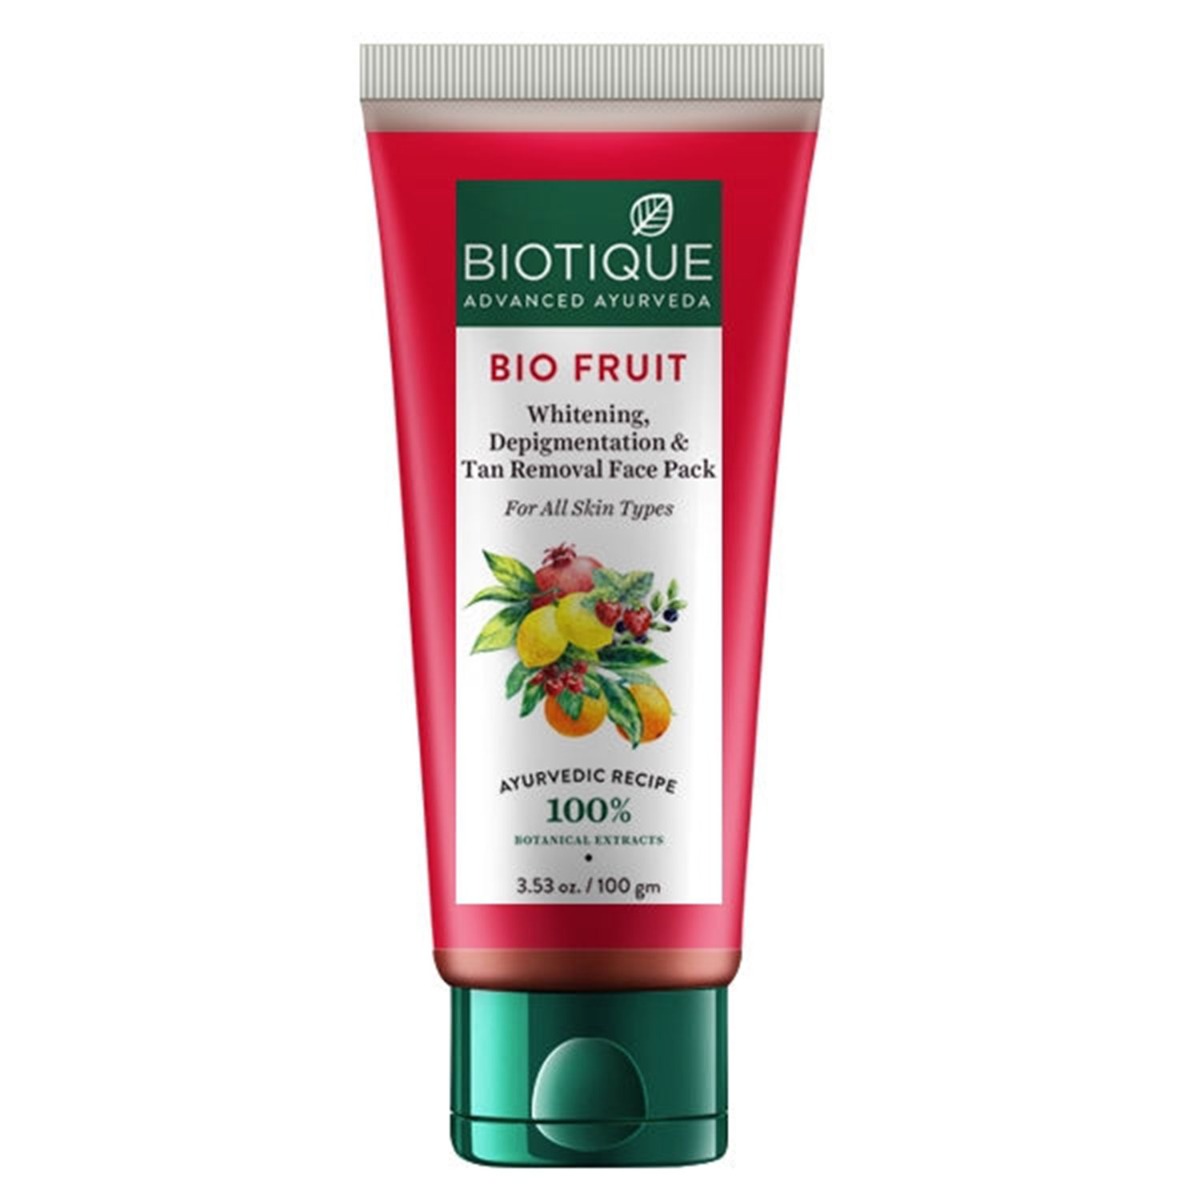 Biotique Bio Fruit Whitening, Depigmentation & Tan Removal Face Pack,100gm